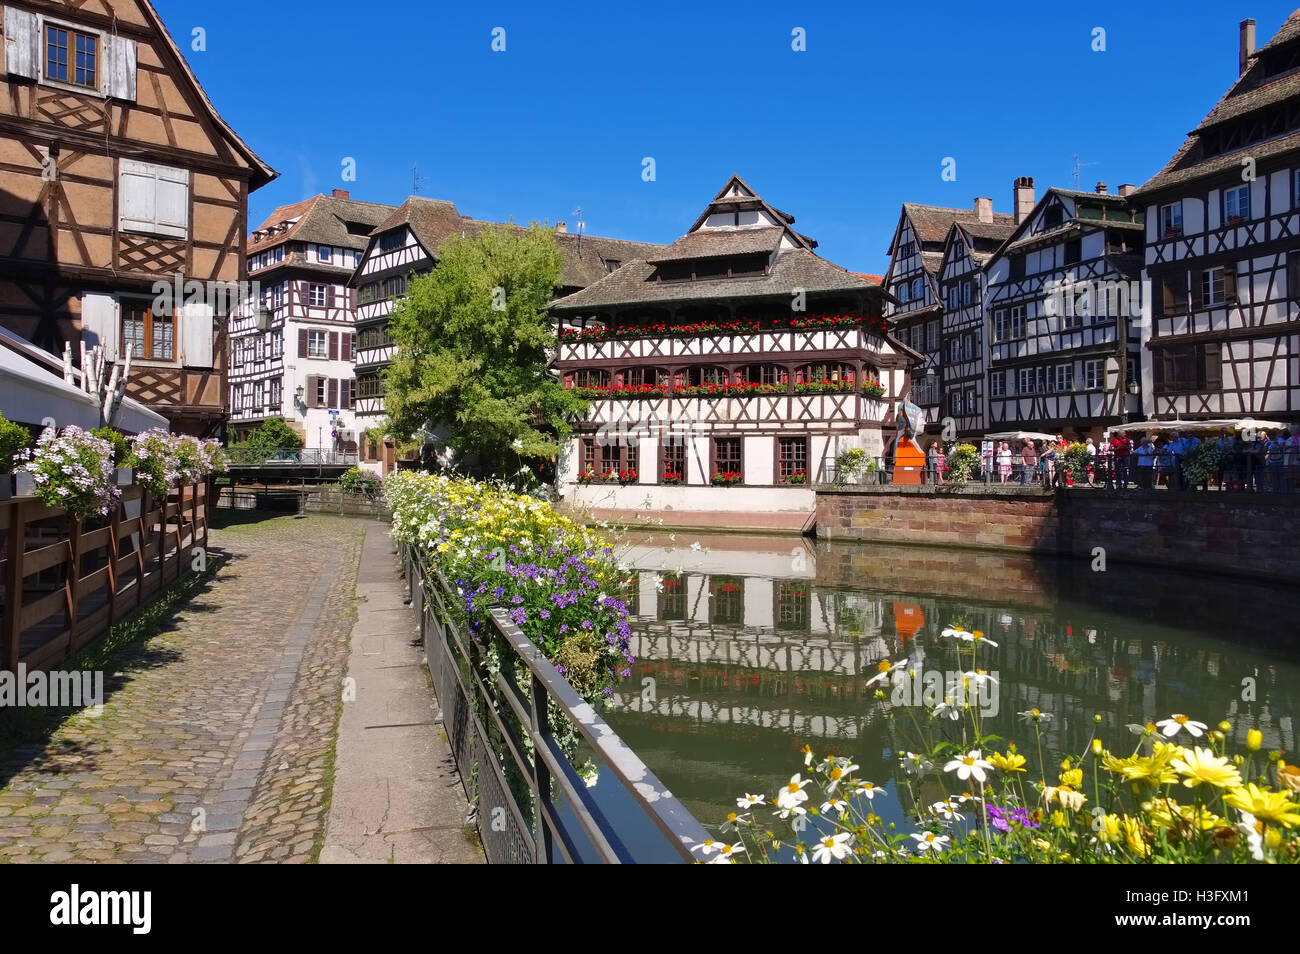 Strasbourg Petite France im Elsass, Frankreich - Strasbourg Petite France en Alsace, France Banque D'Images